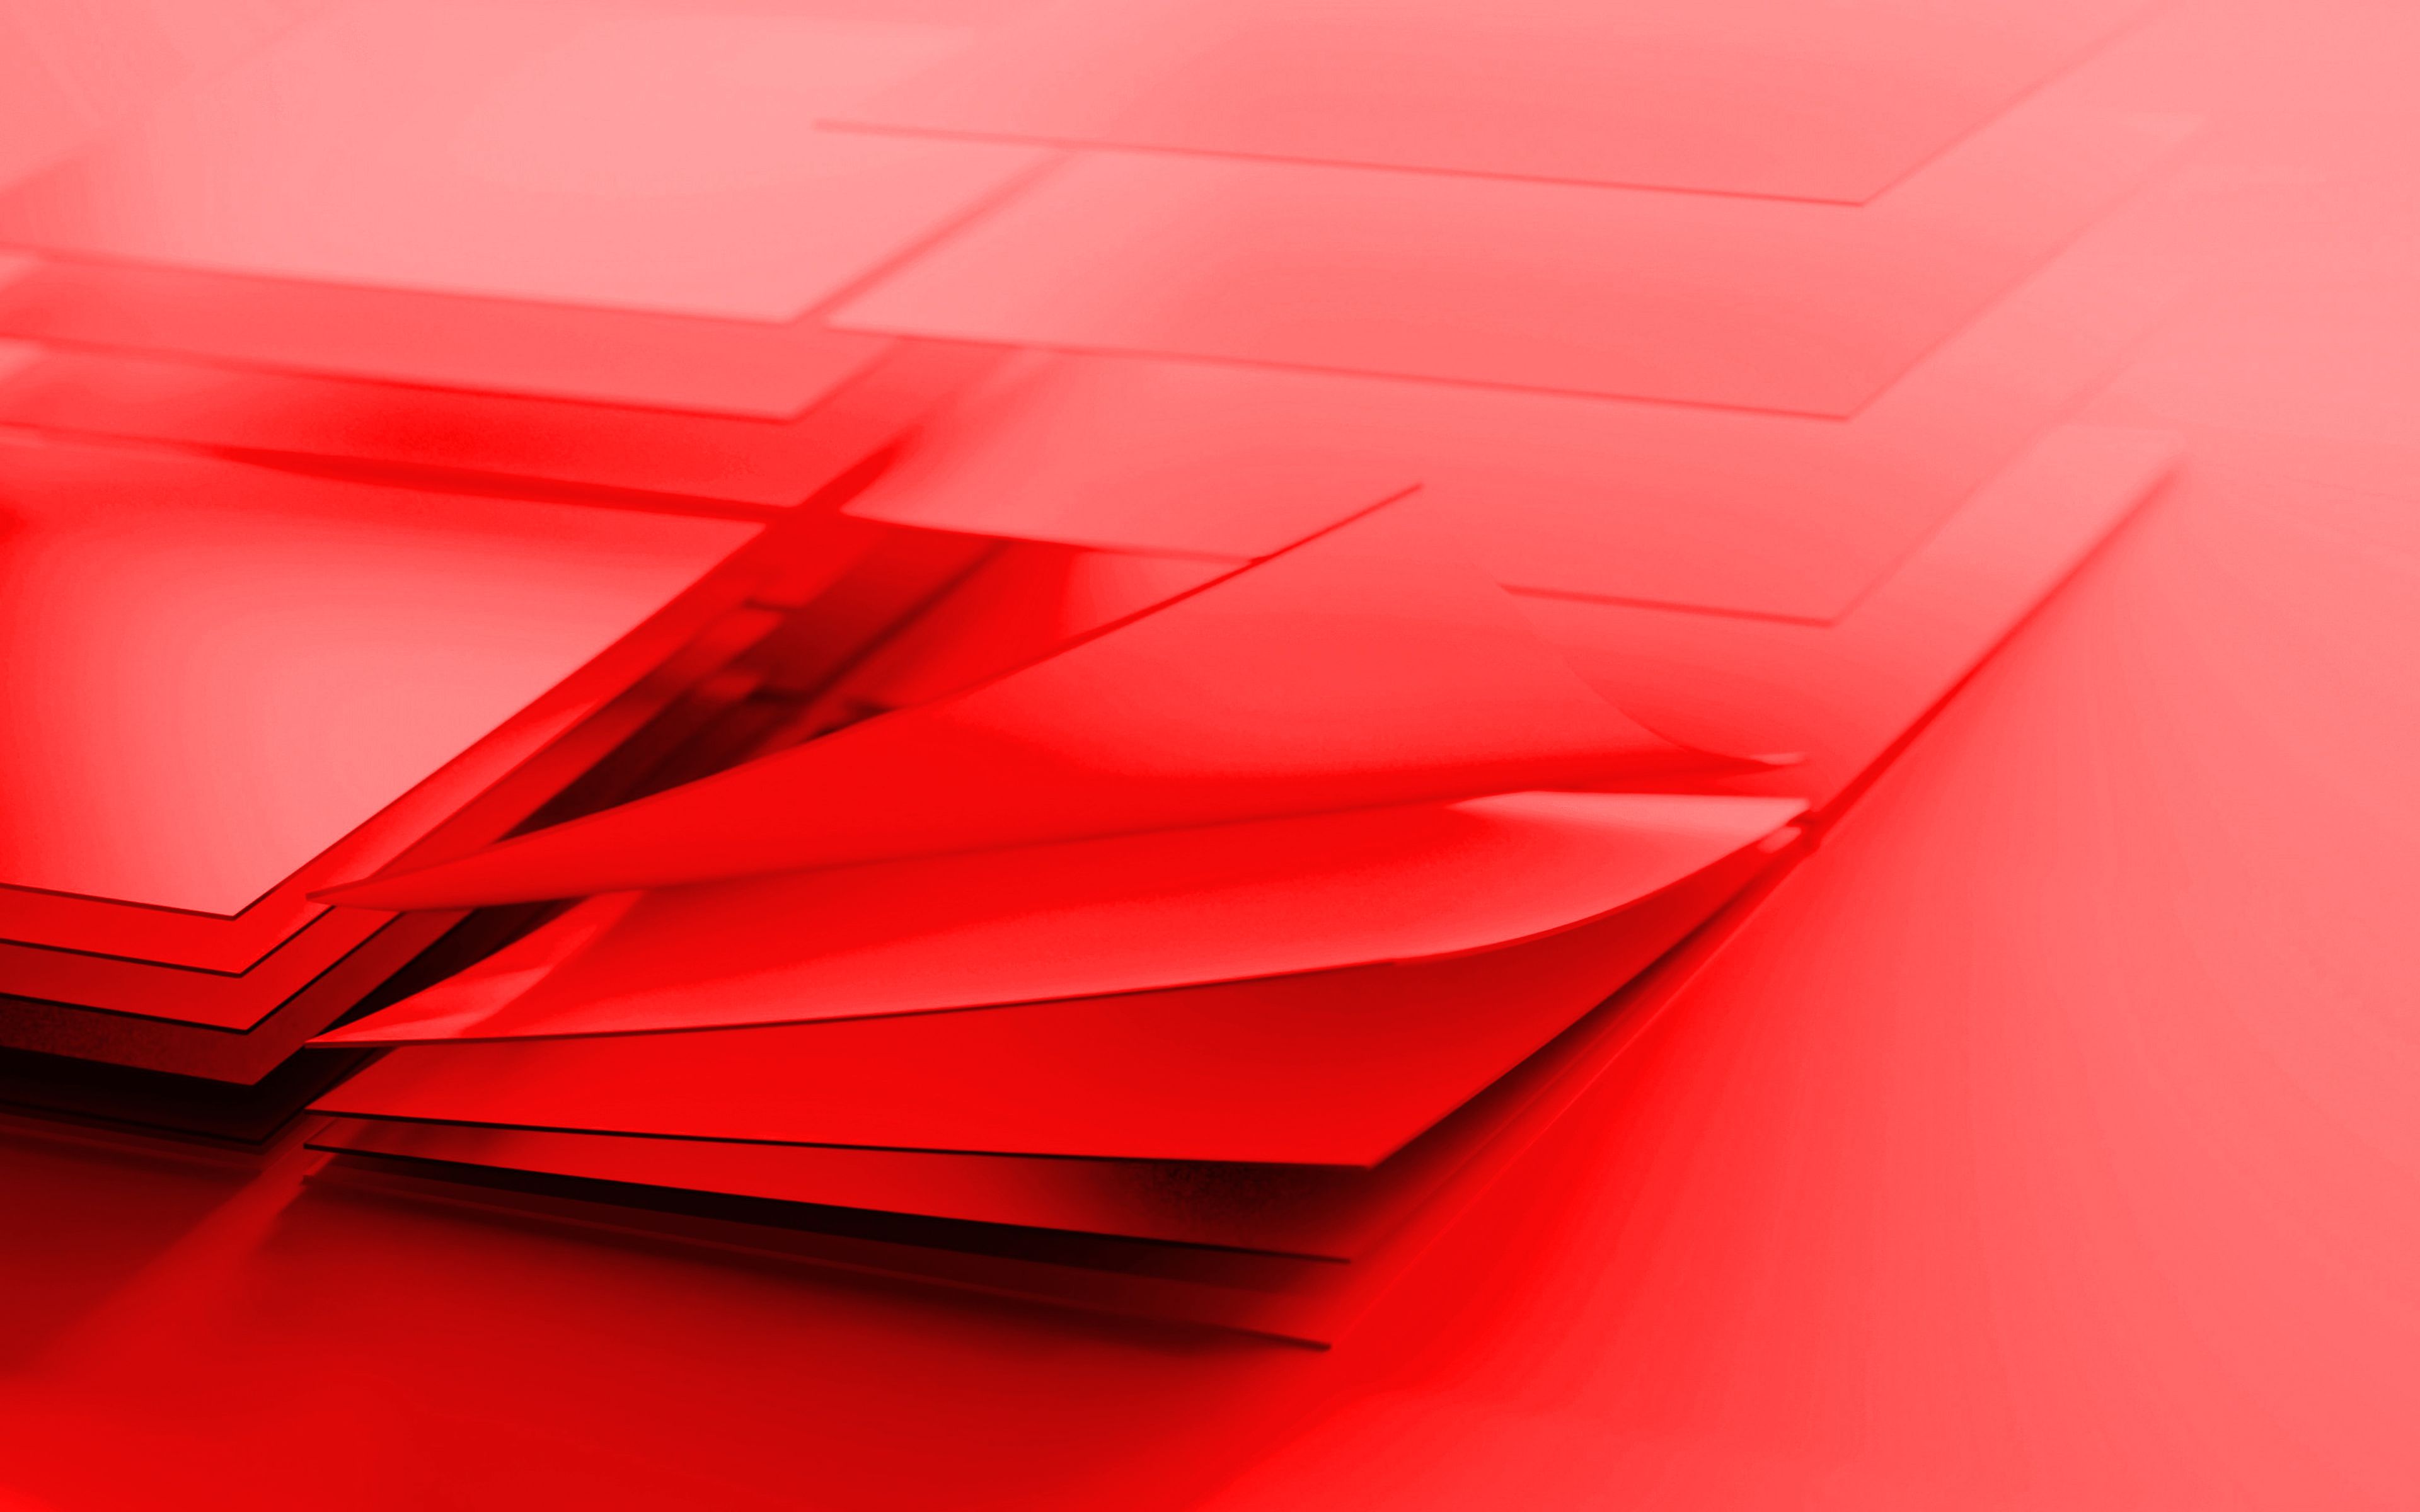 Download wallpaper Windows red logo, 4k, Windows glass logo, Windows emblem, red background, 3D Windows logo, Windows for desktop with resolution 3840x2400. High Quality HD picture wallpaper